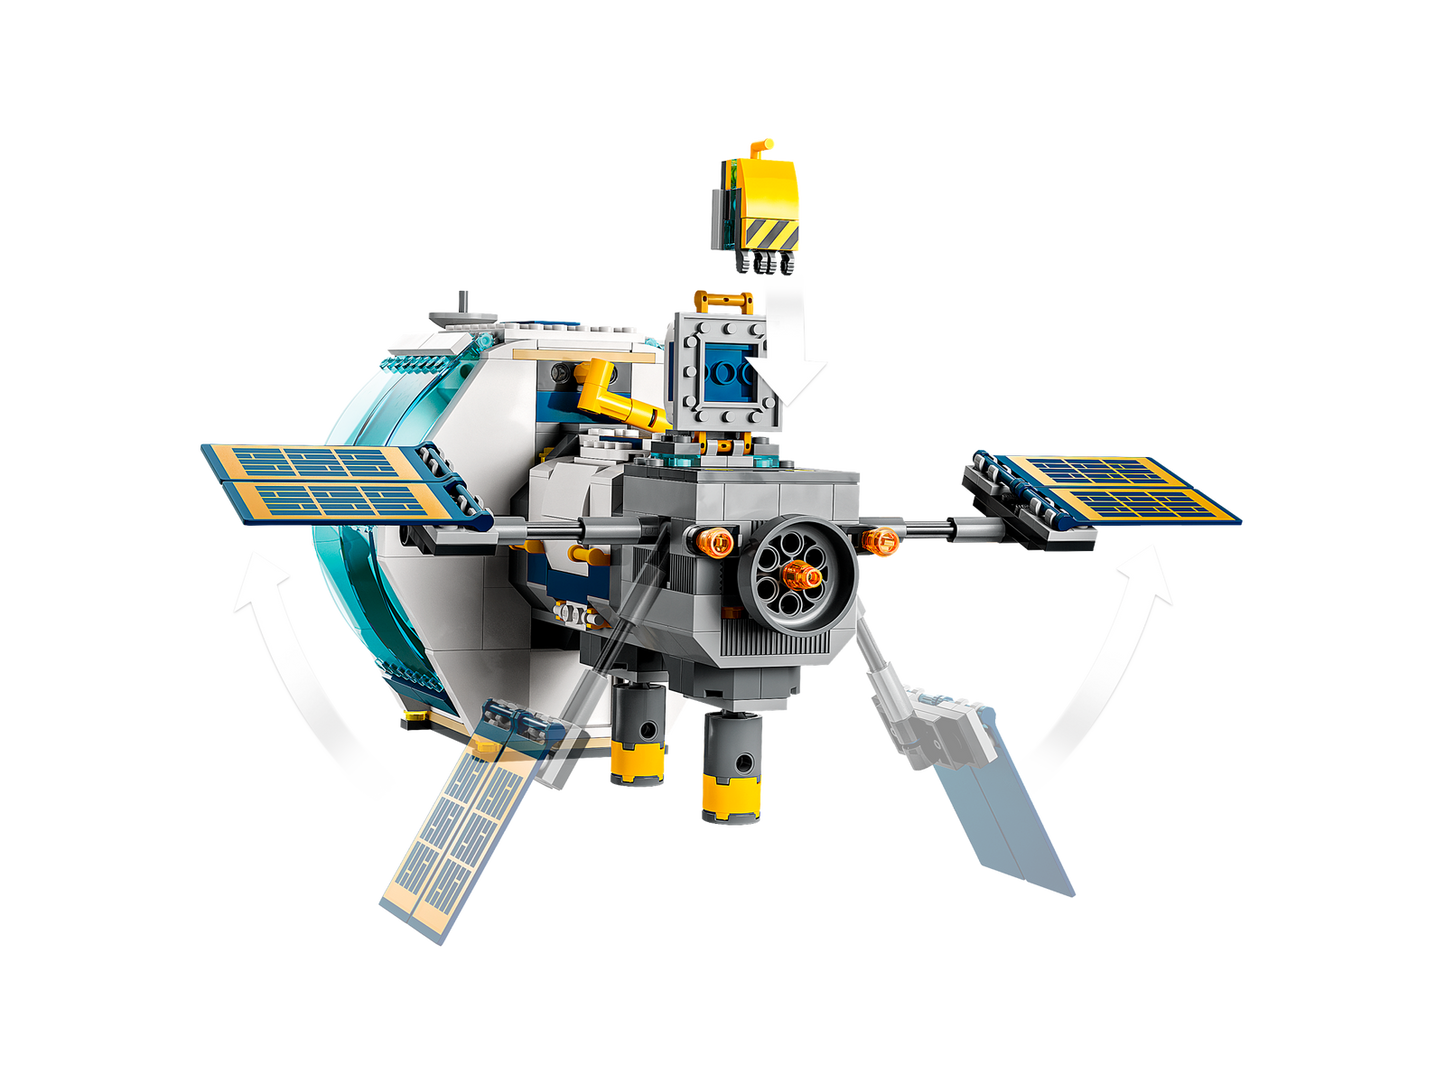 LEGO City Lunar Space Station 60349